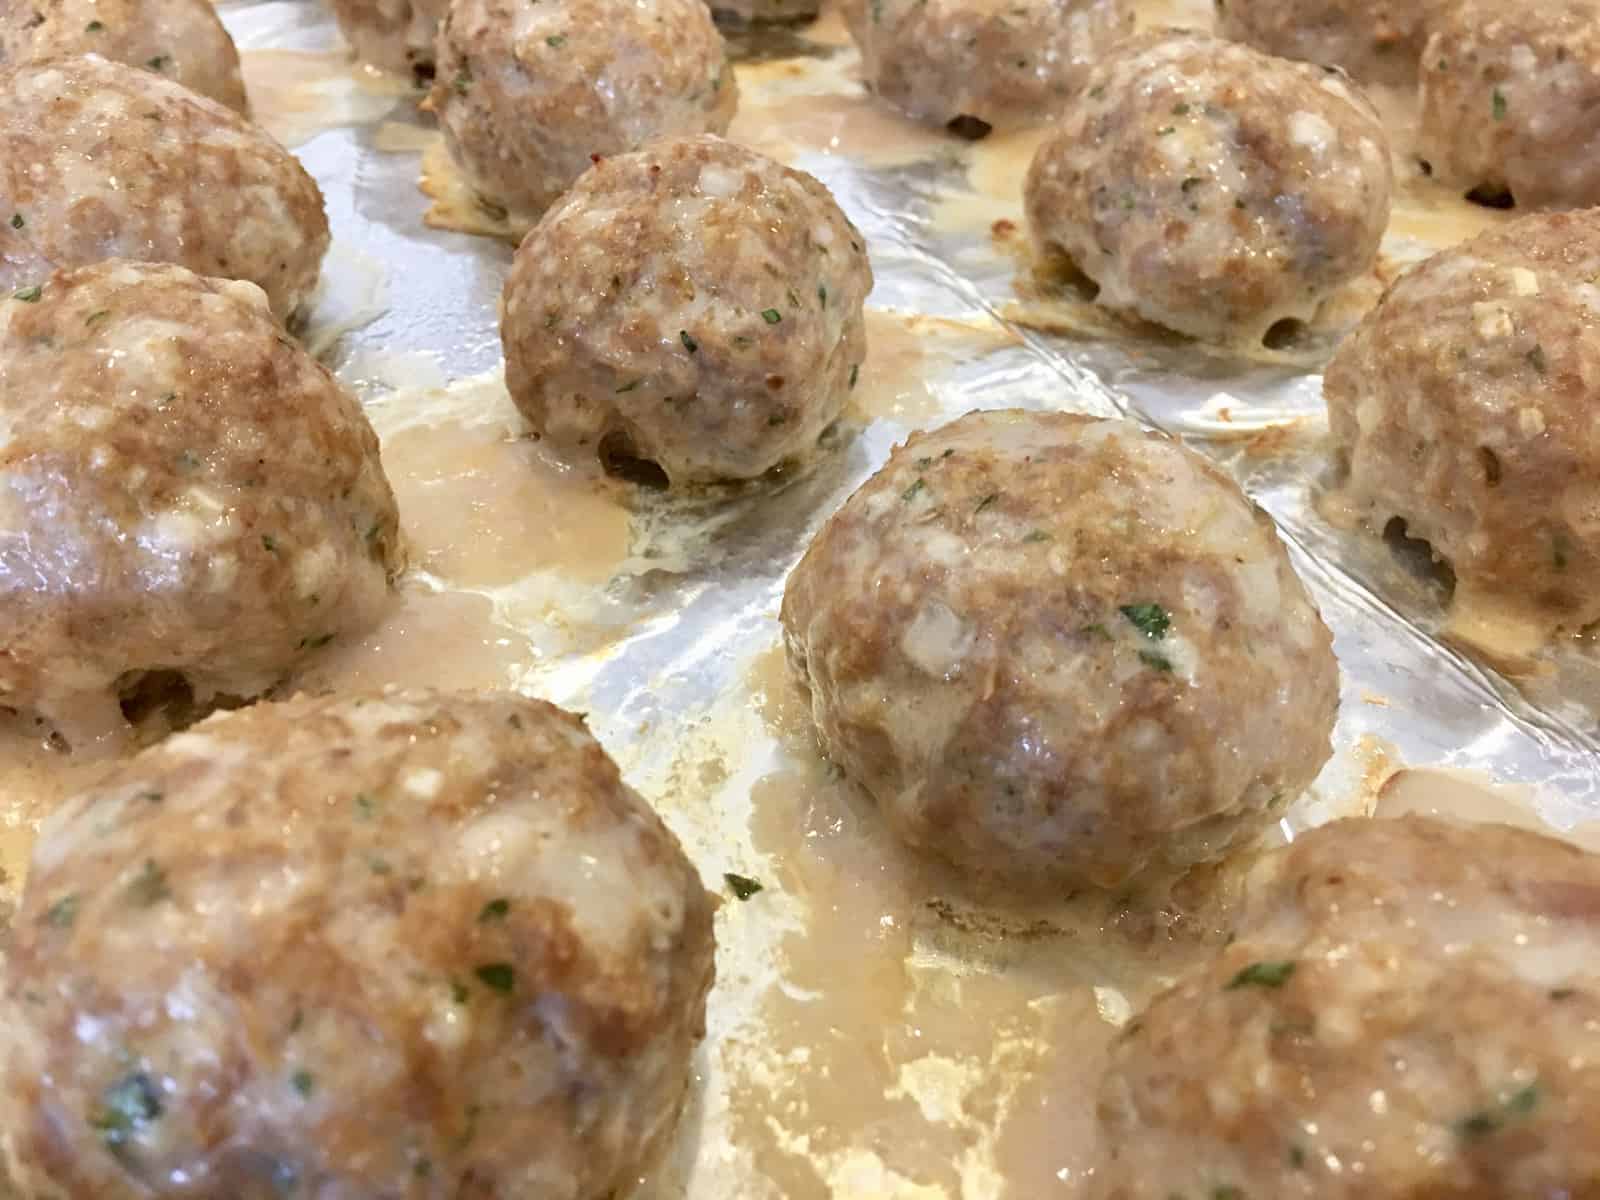 meatballs on a foil lined baking sheet. 